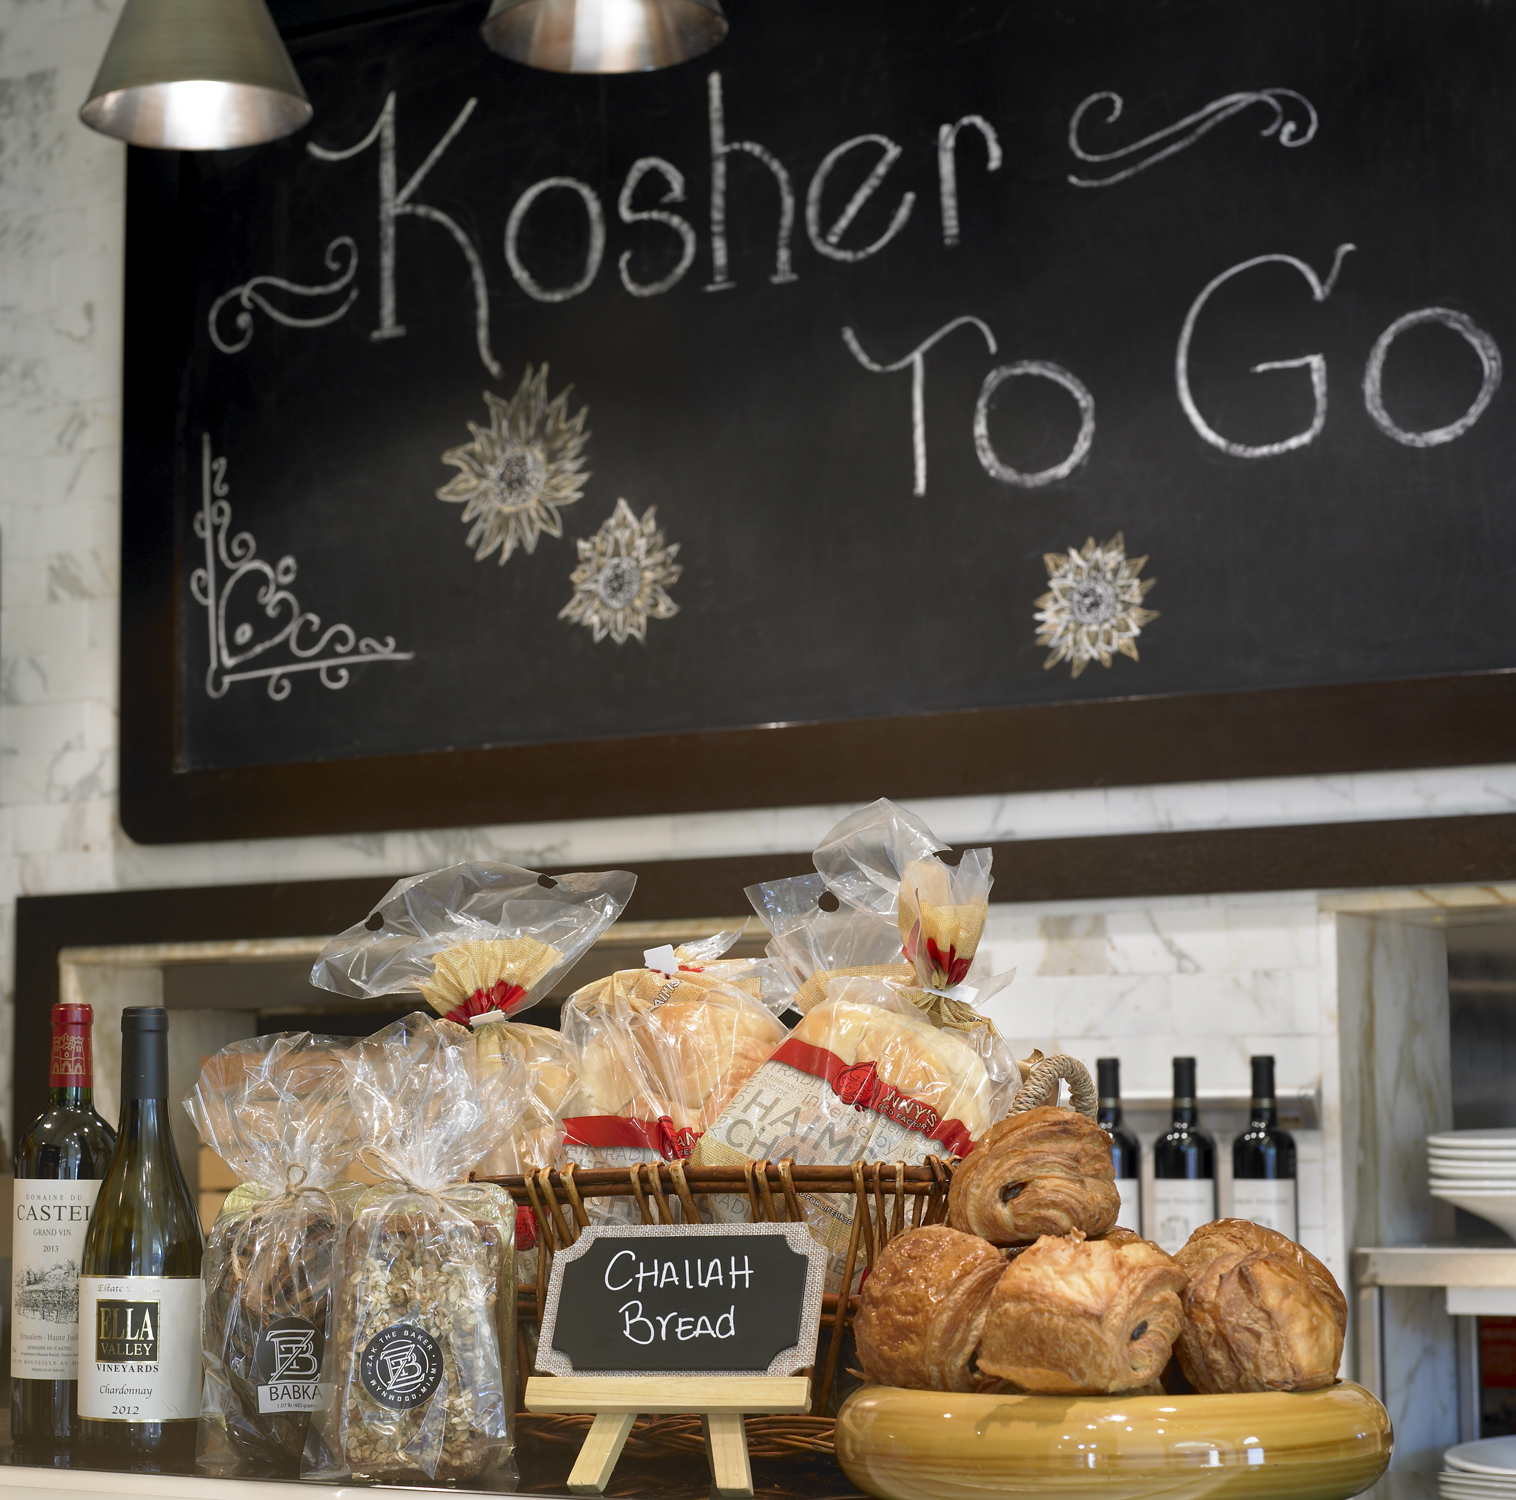 The new Kosher-To-Go marketplace